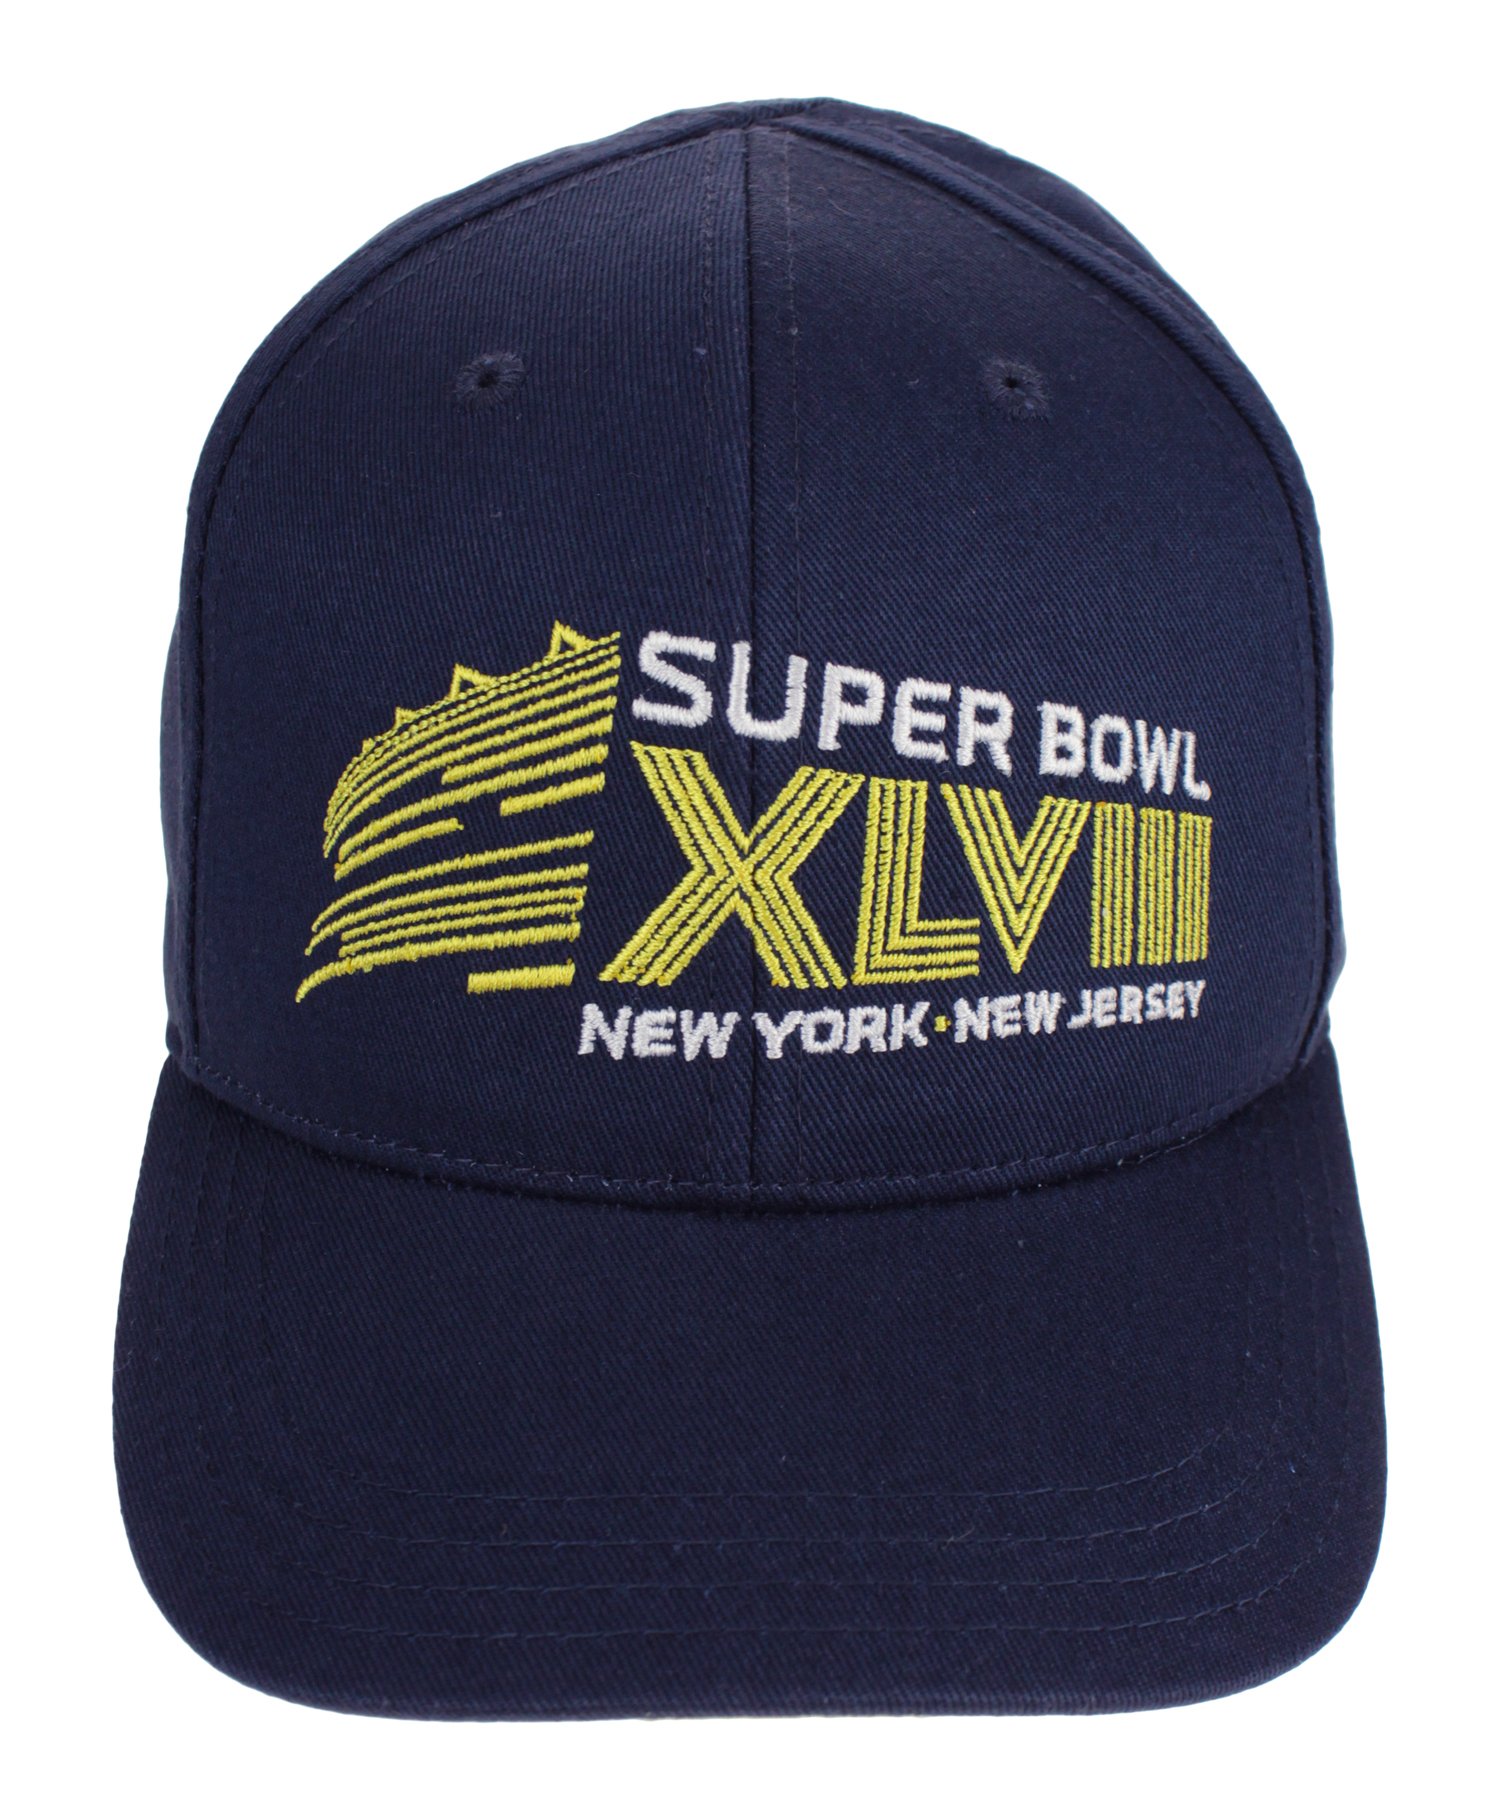 NFL Toddler's Super Bowl XLVIII Commemorative Adjustable Cap, OSFM - image 1 of 1